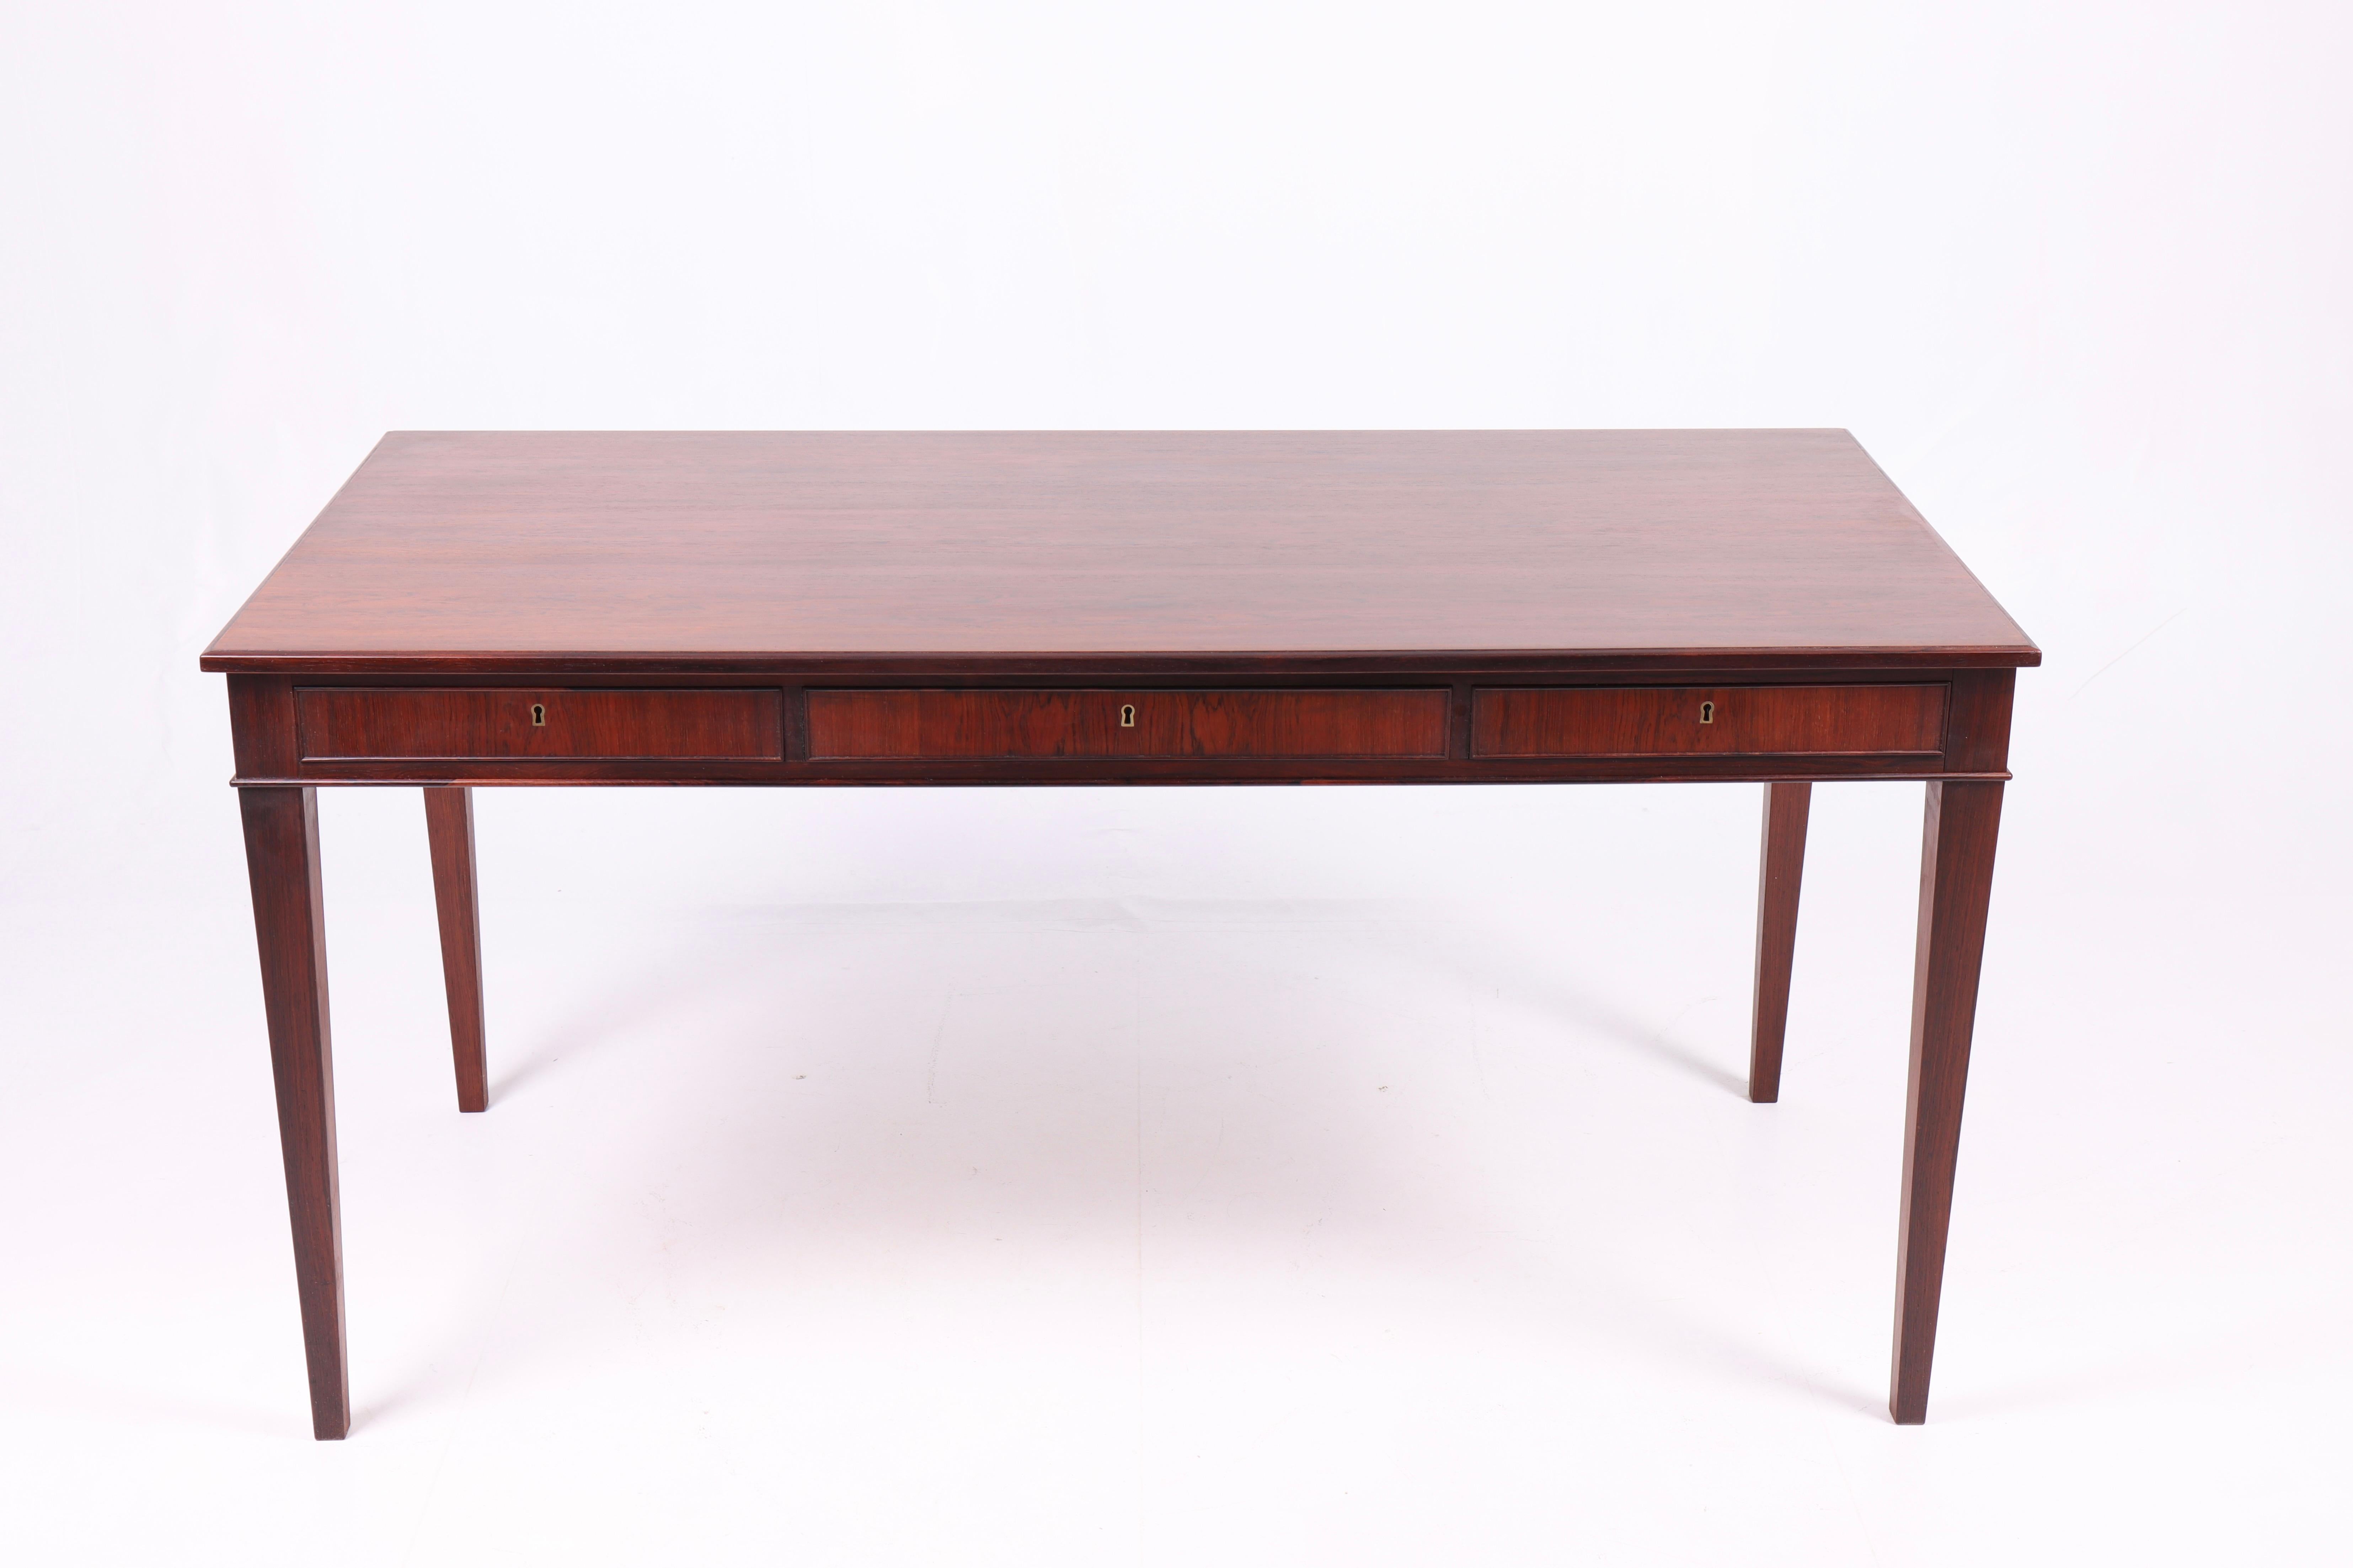 Scandinavian Modern Midcentury Desk in Rosewood Designed by Frits Heningsen, 1950s For Sale